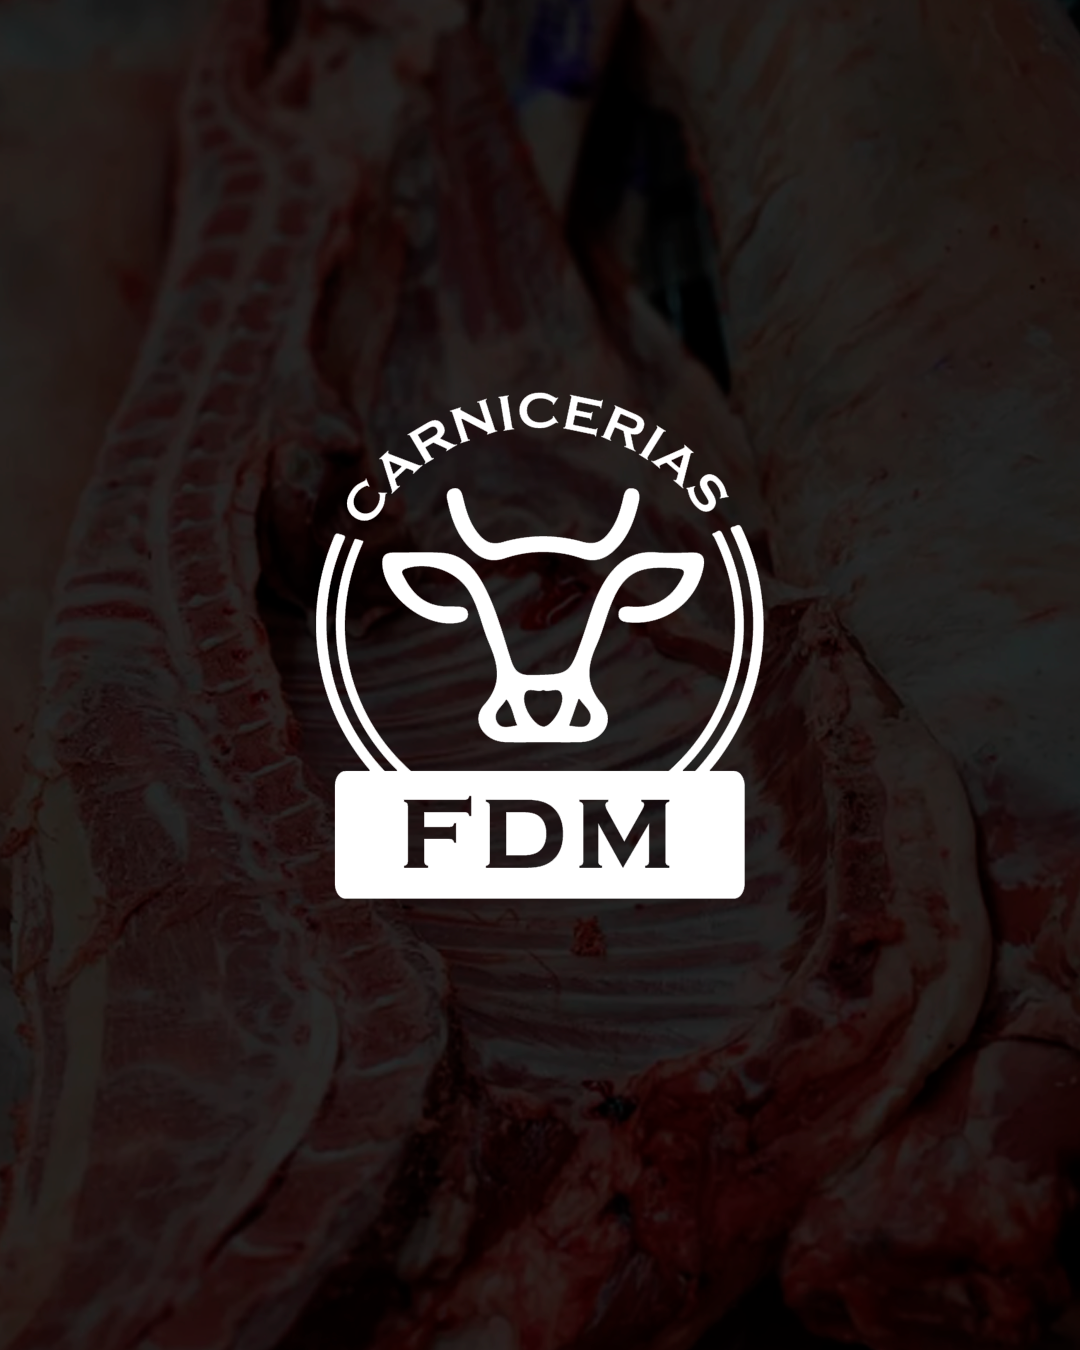 Carniceria FDM